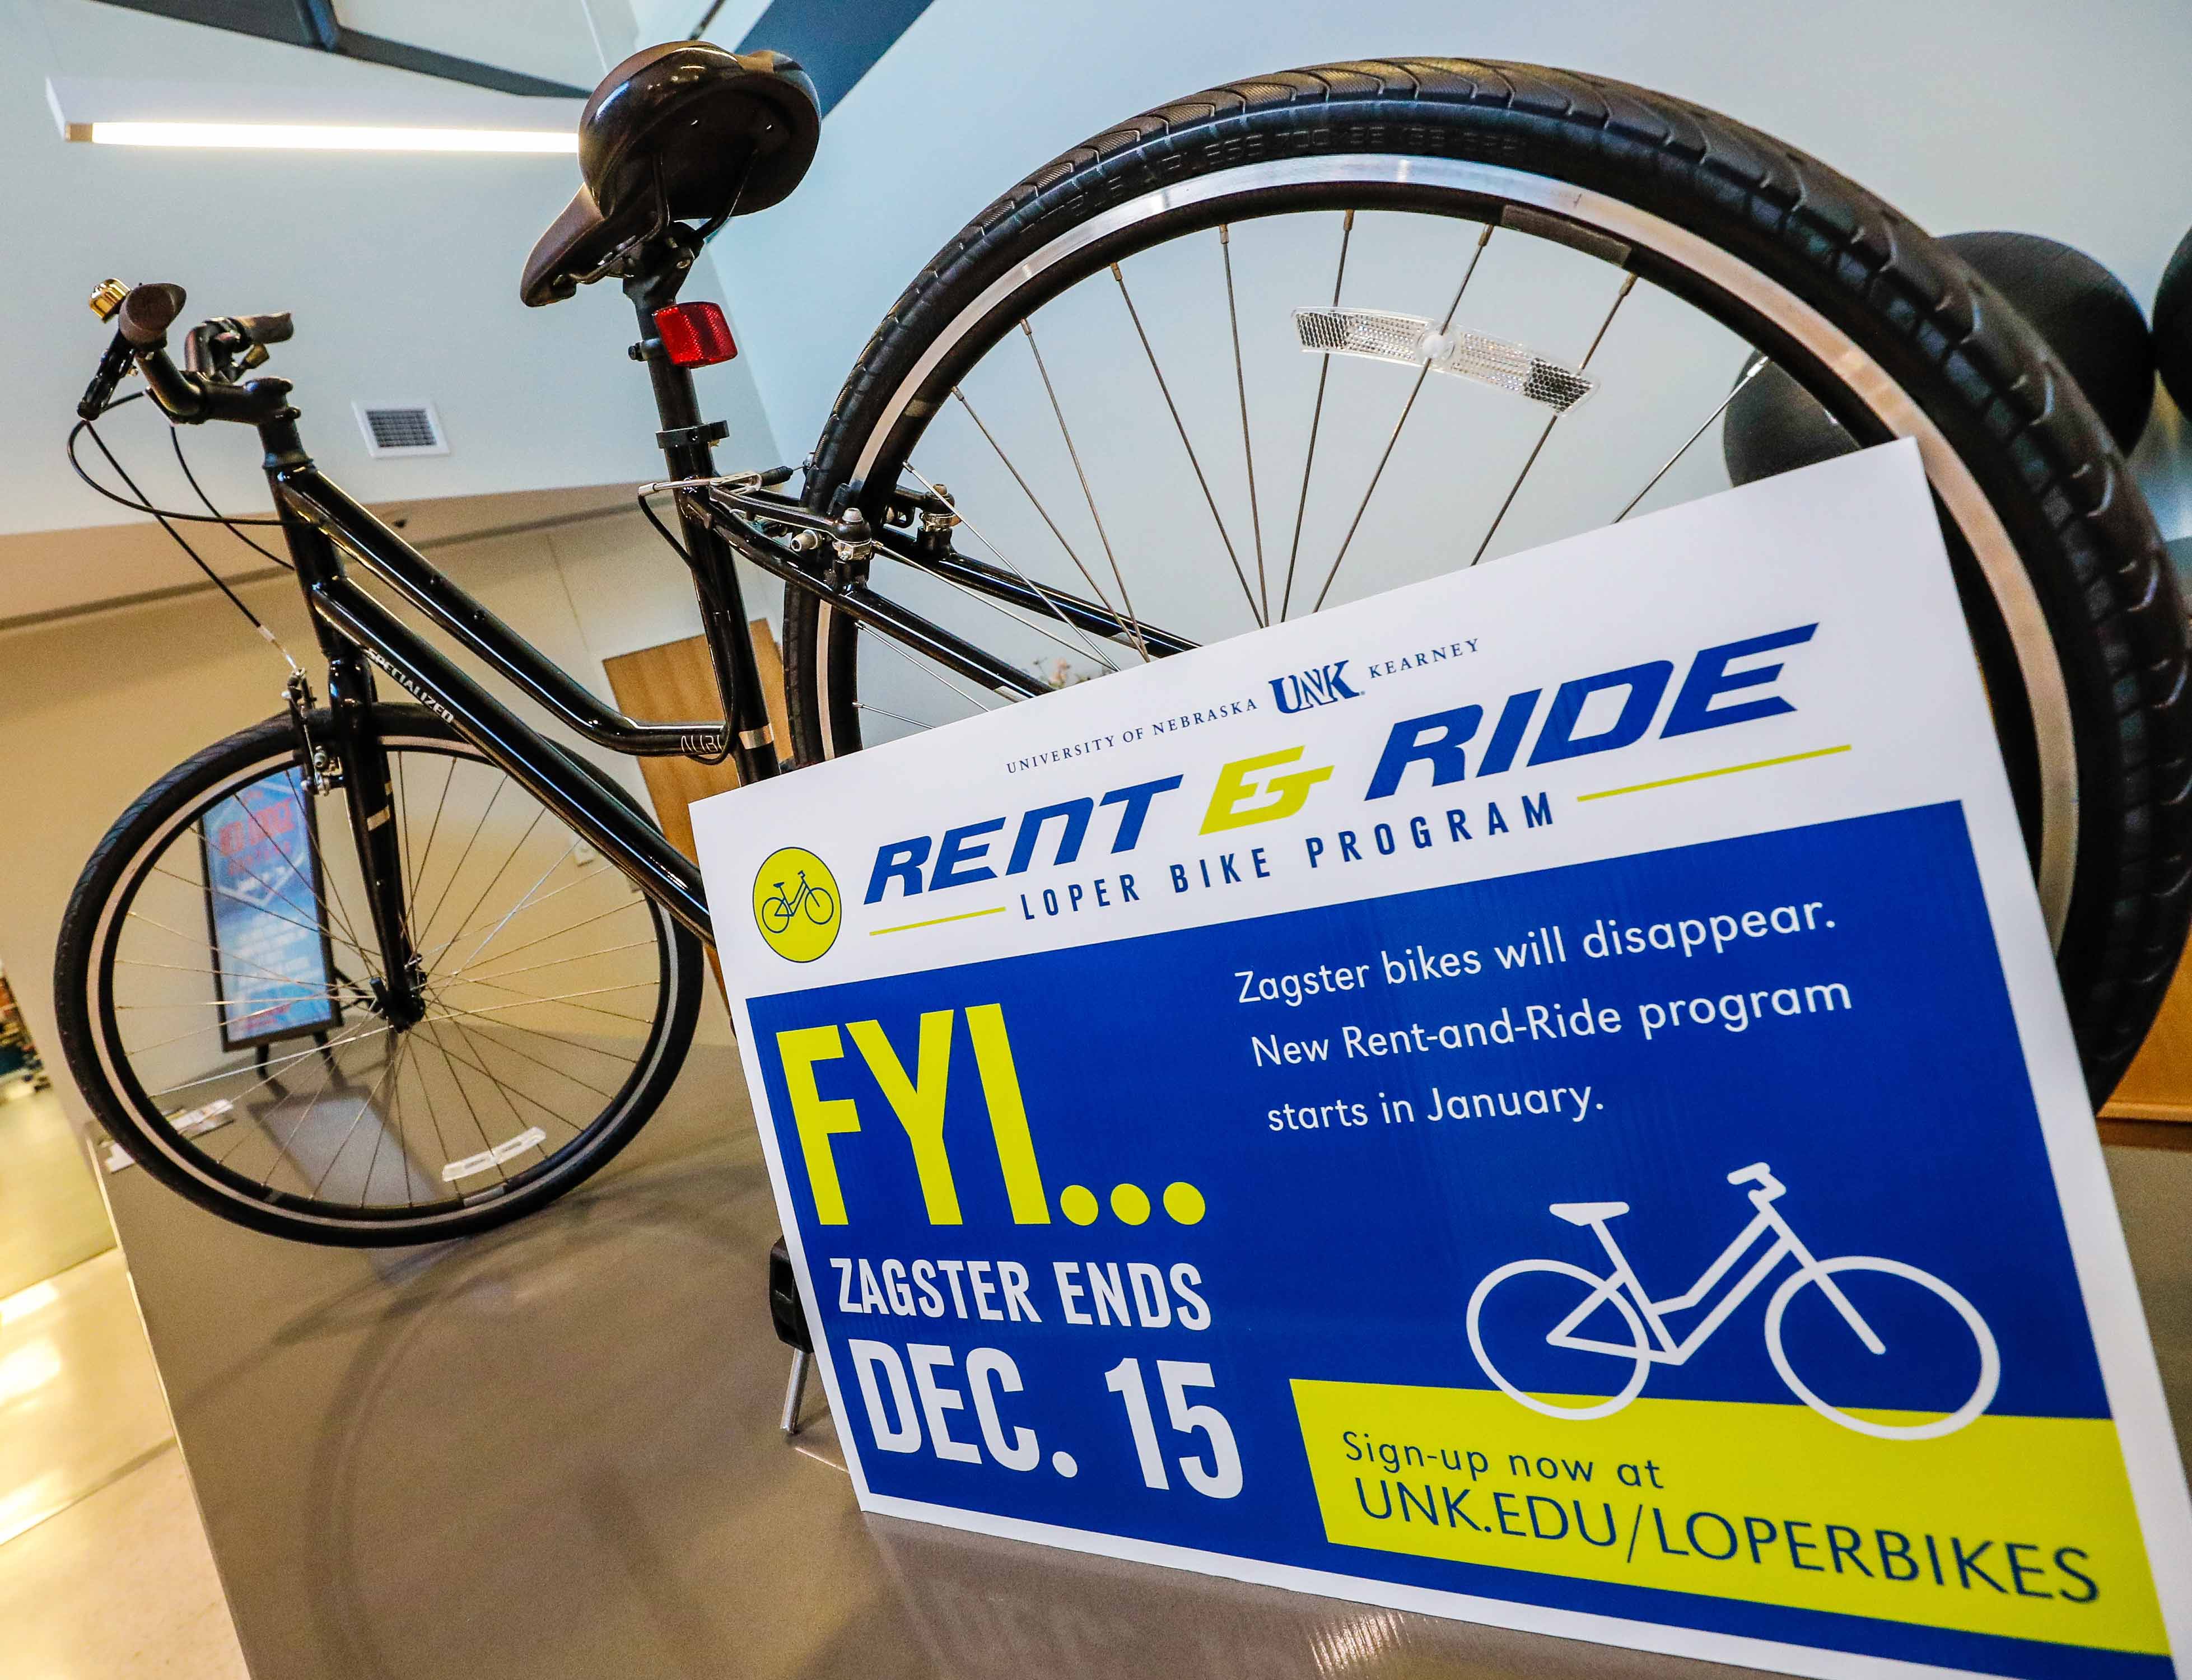 New Rent Ride Bike Rental Replacing Zagster Beginning Jan 1